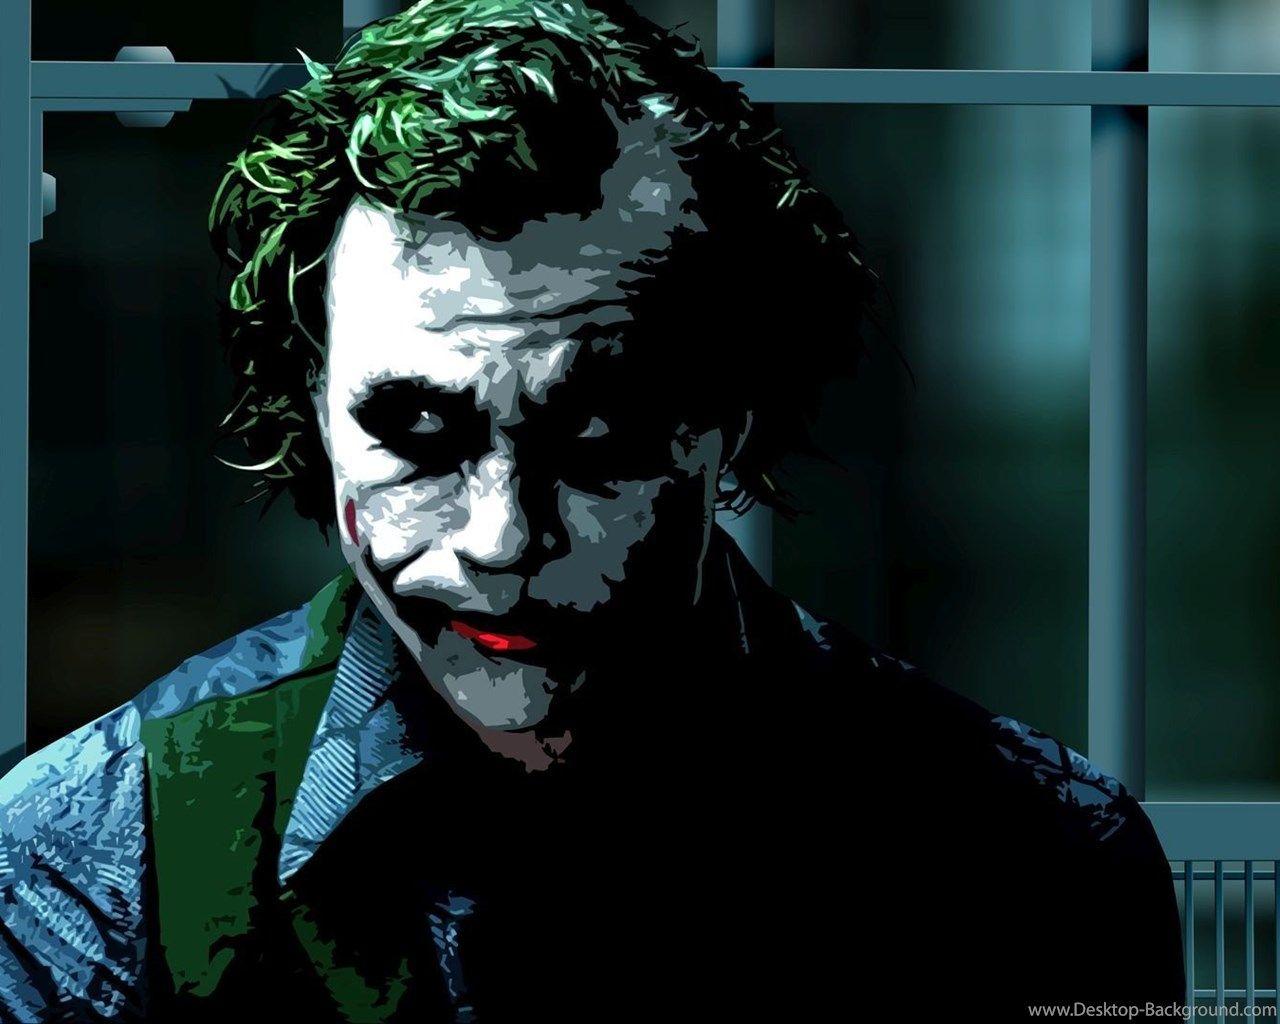 Dark Knight Joker in 4K Ultra HD Wallpapers - Top Free Dark Knight ...